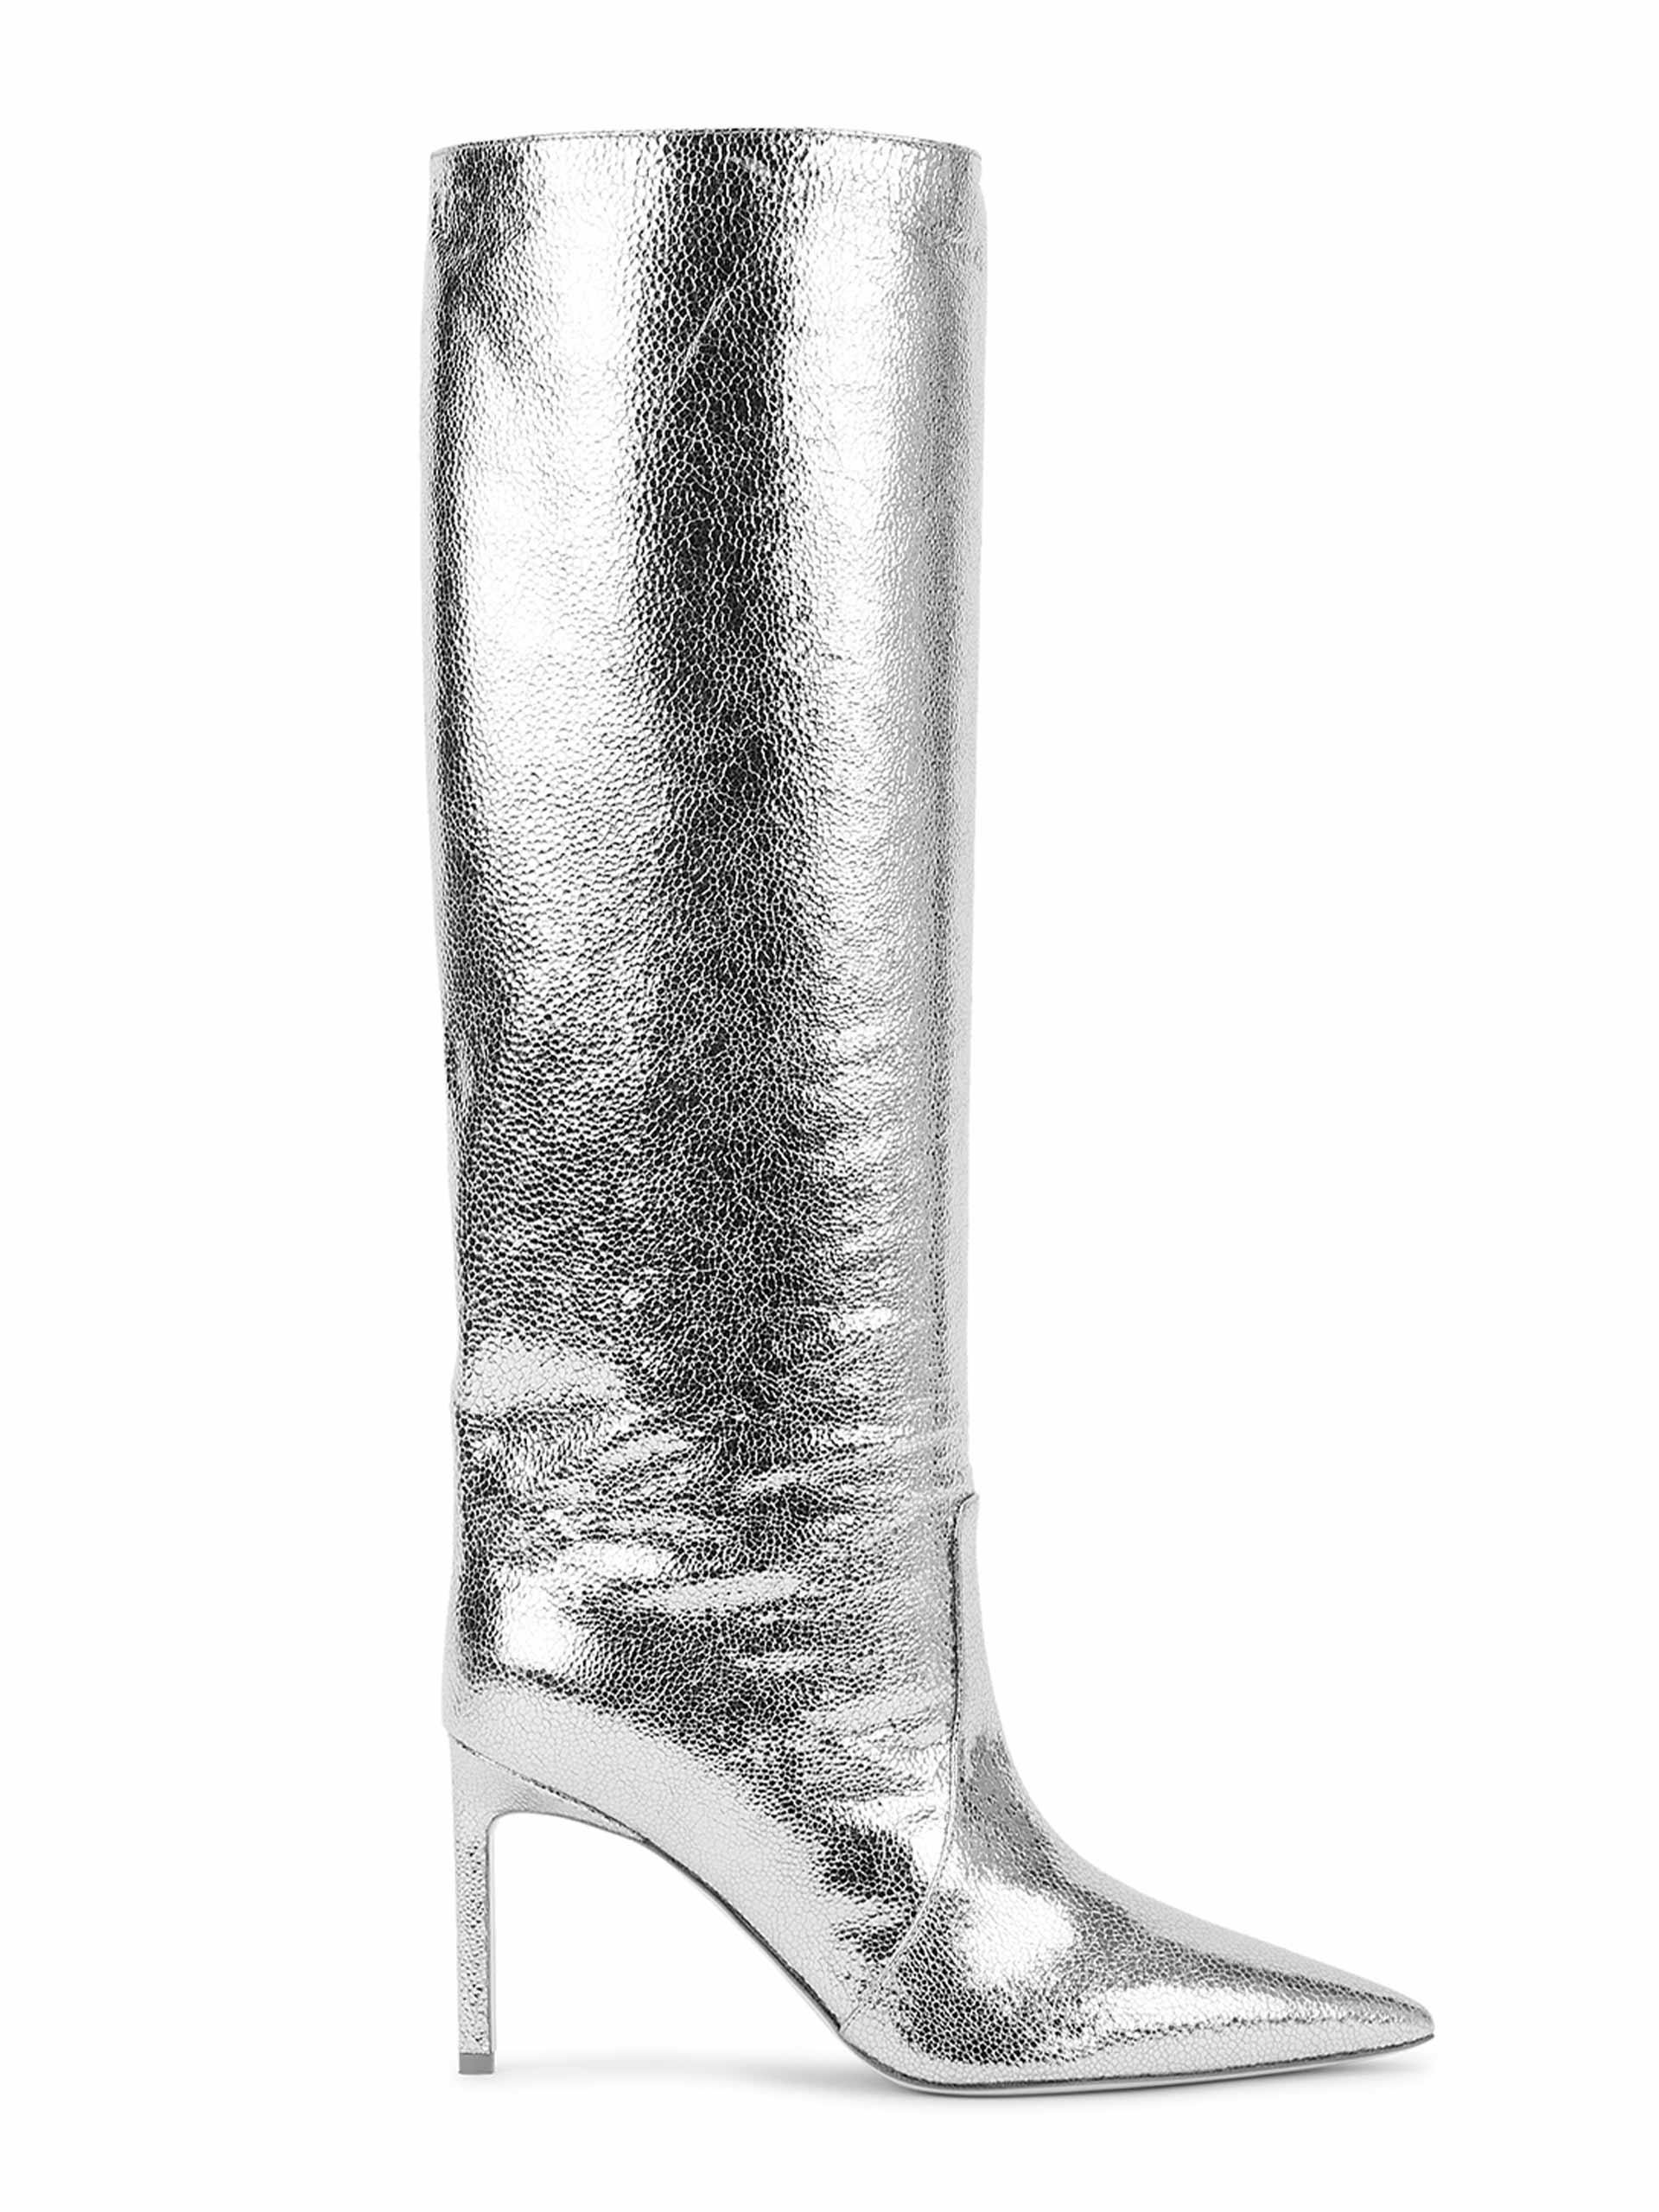 Josephine 85 metallic silver leather knee-high boots